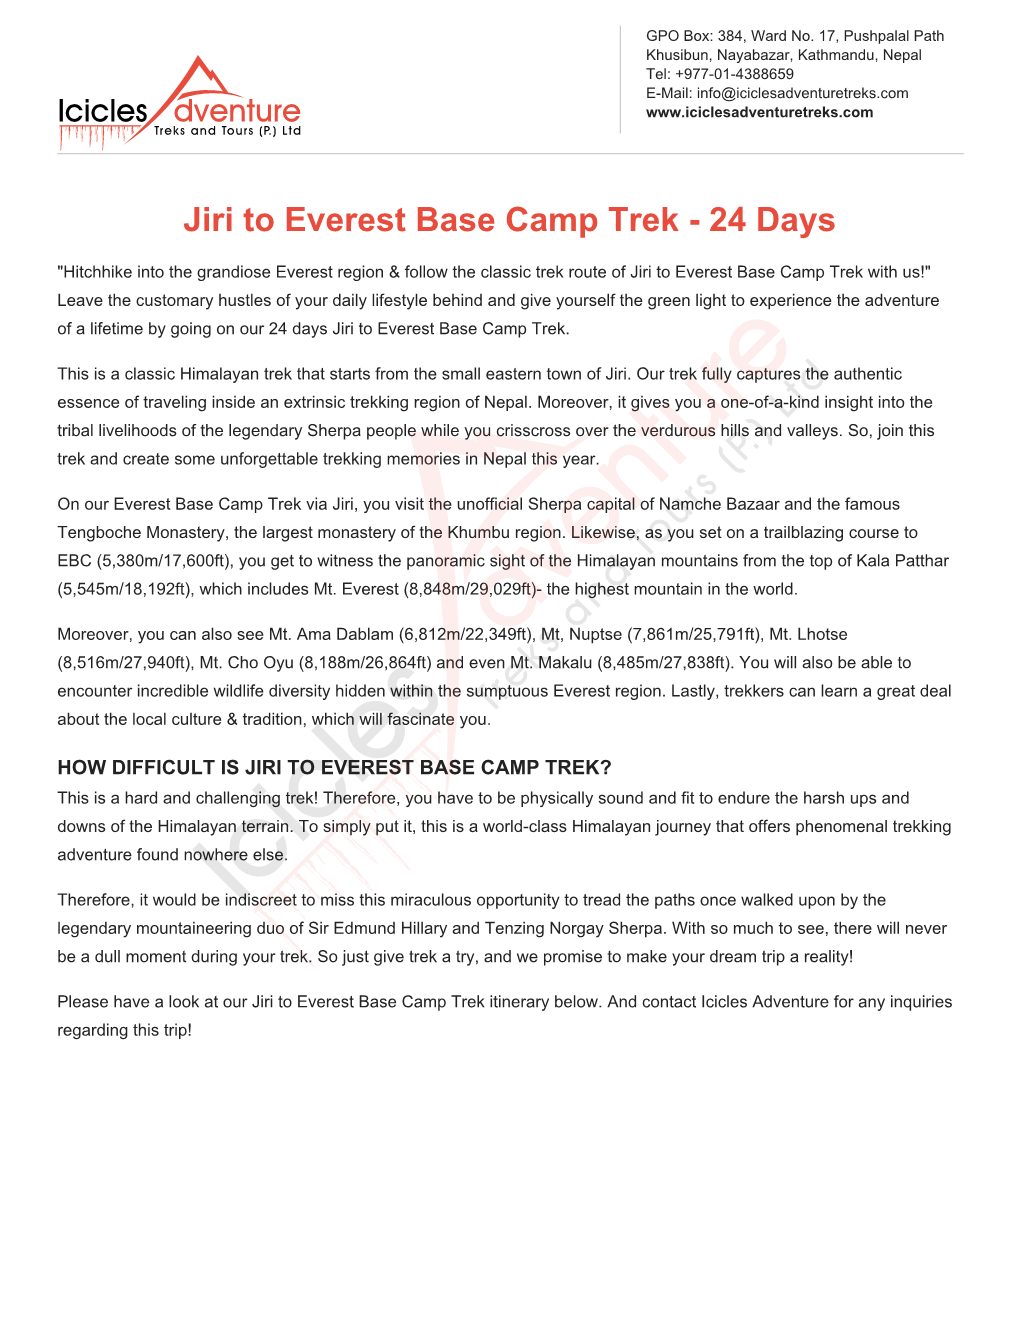 Jiri to Everest Base Camp Trek - 24 Days